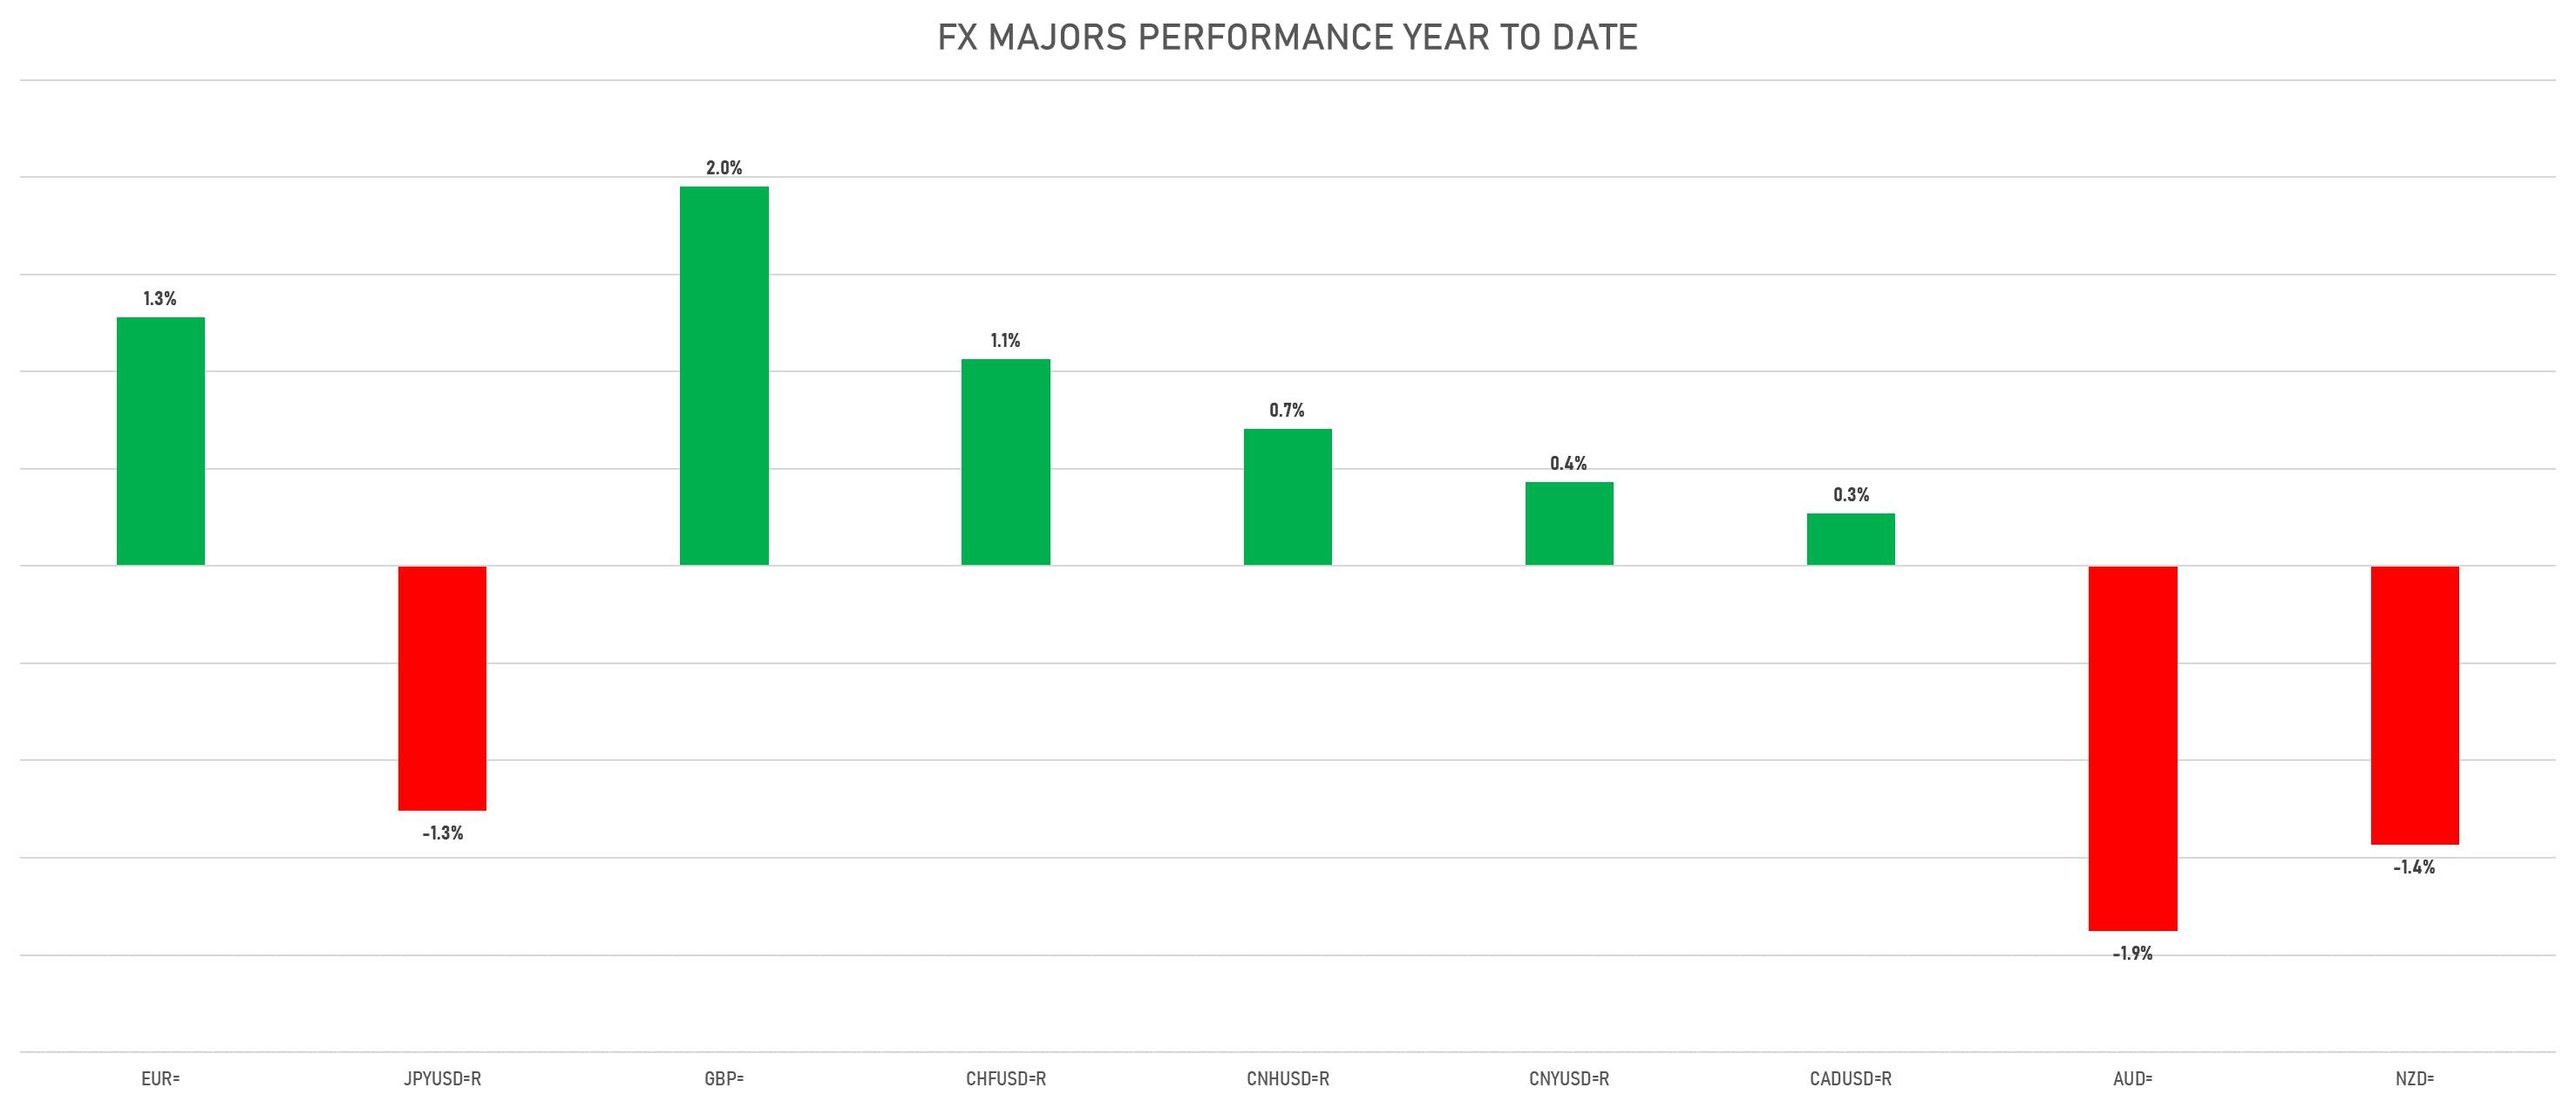 FX Majors performance YTD | Sources: phipost.com, Refinitiv data